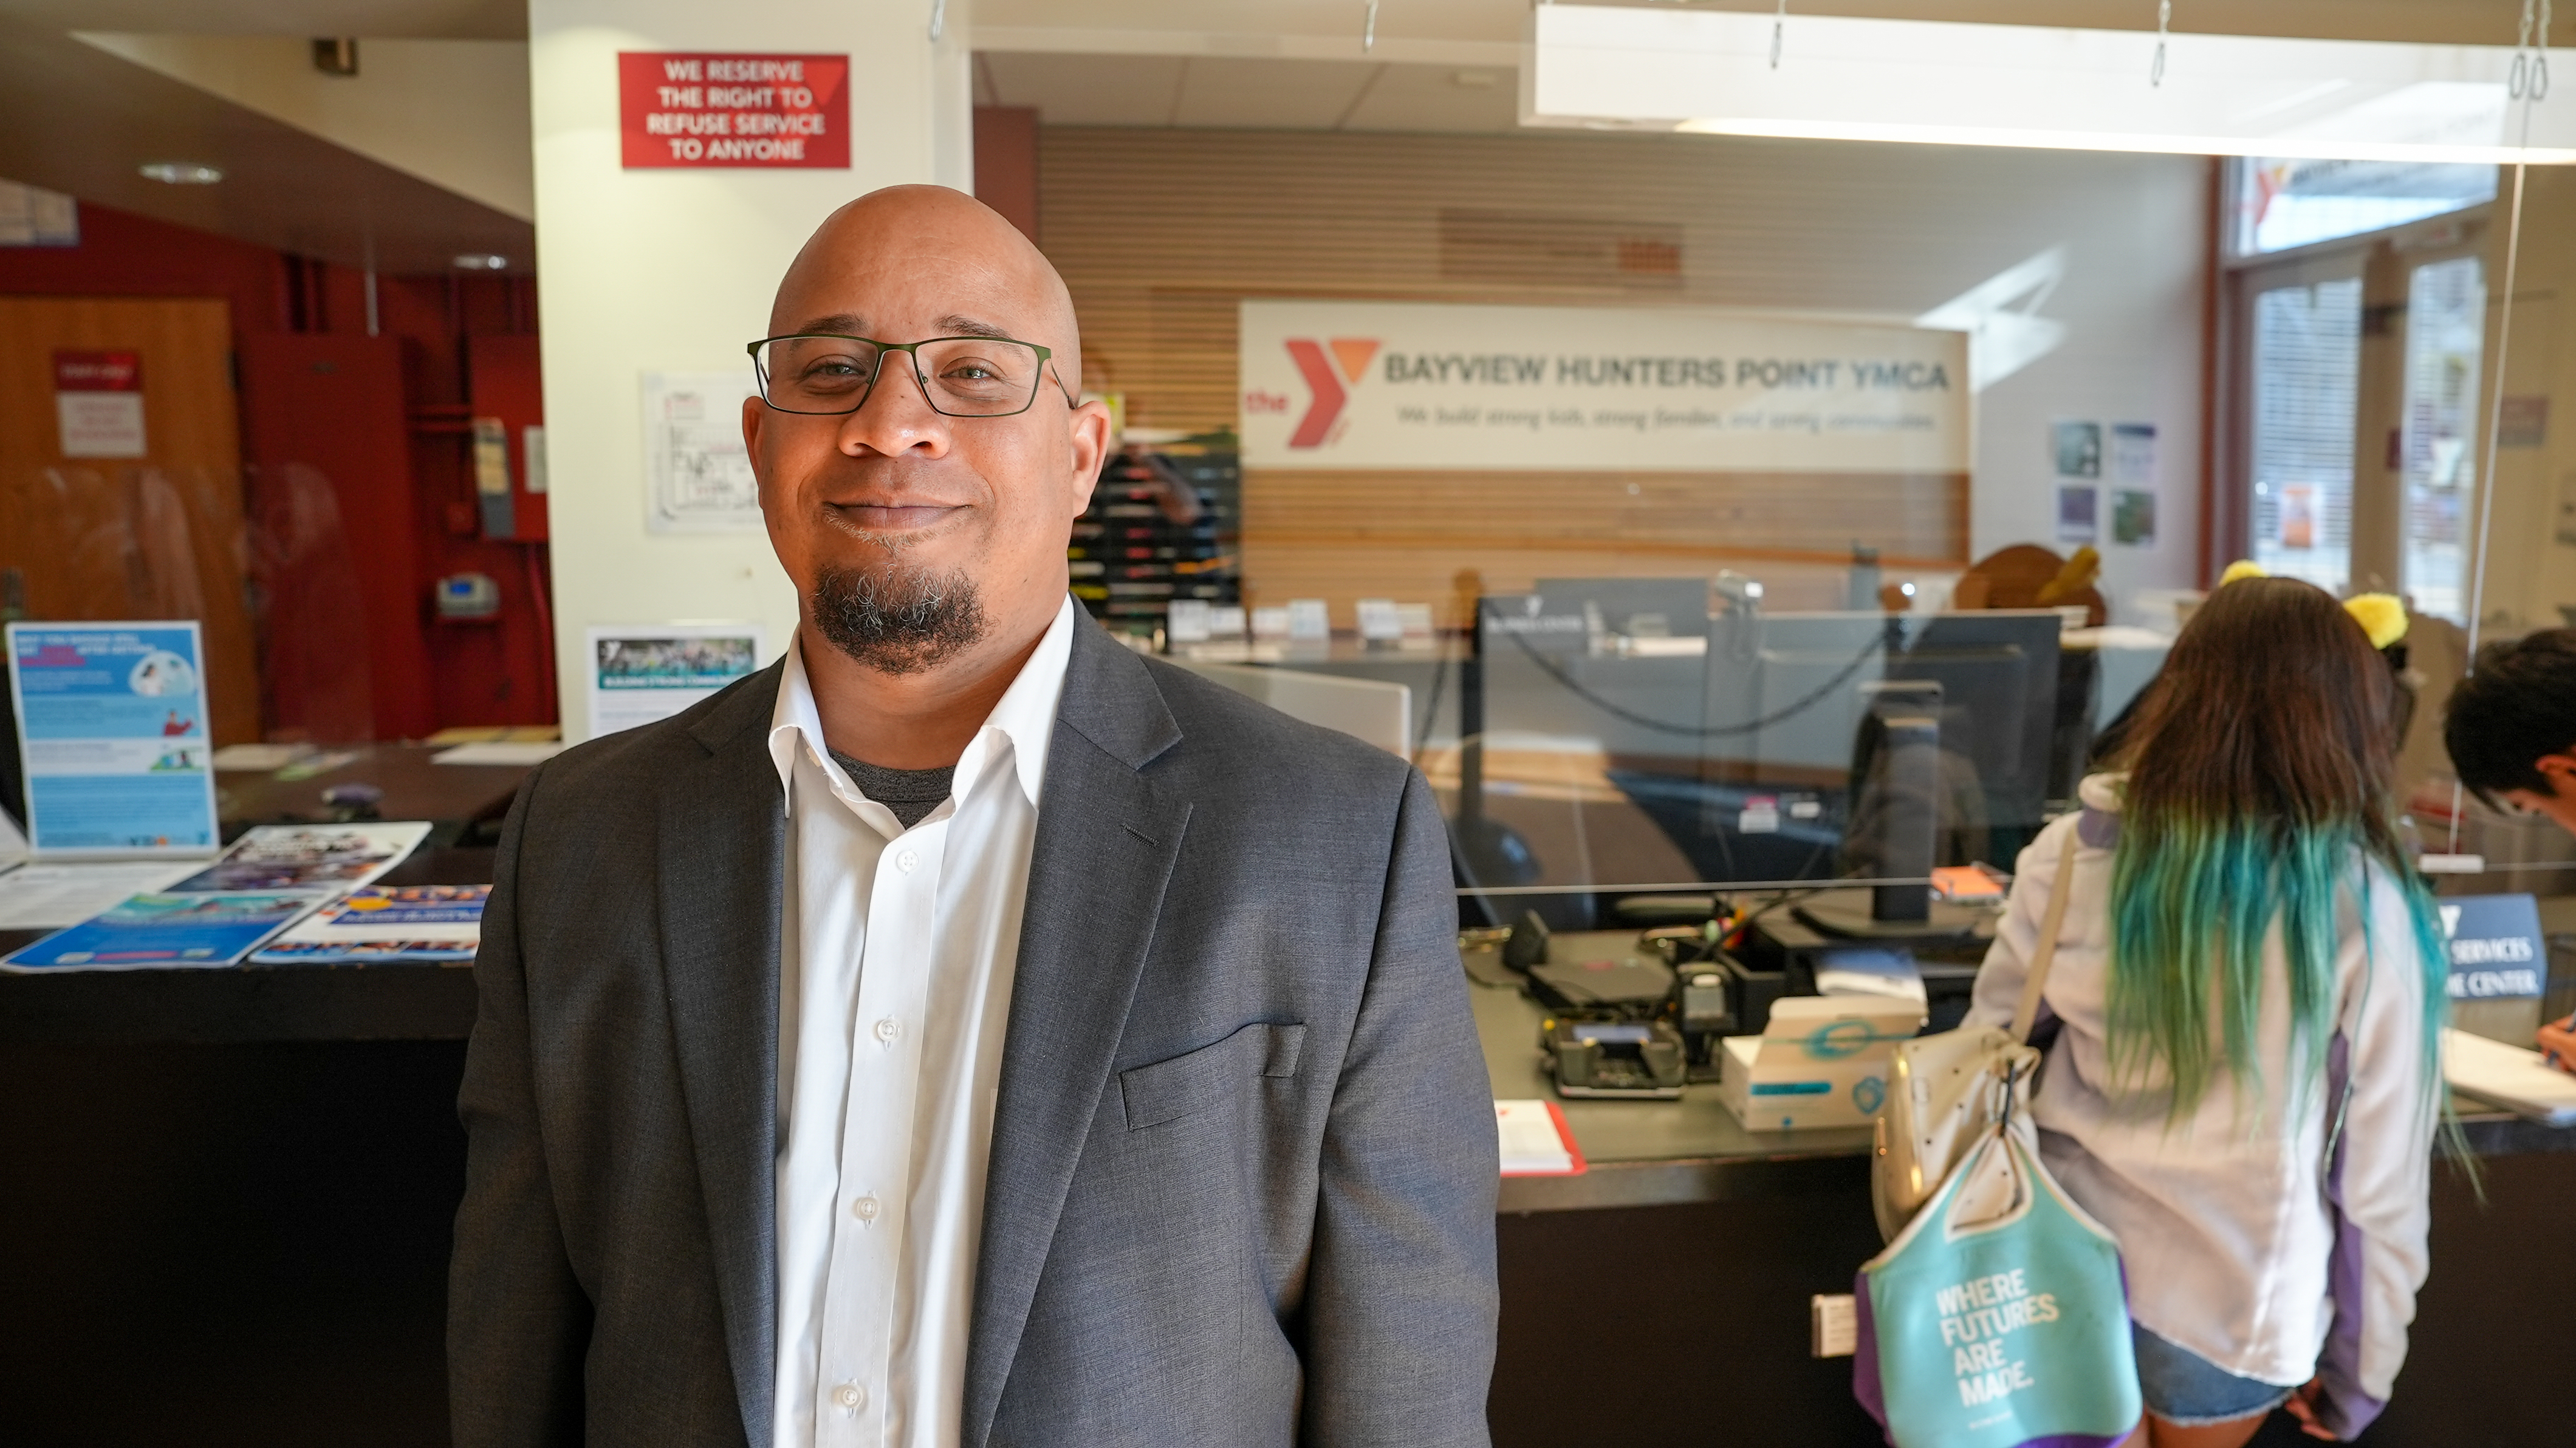 Demetrius Durham, Associate Executive Director of Bayview Hunters Point YMCA